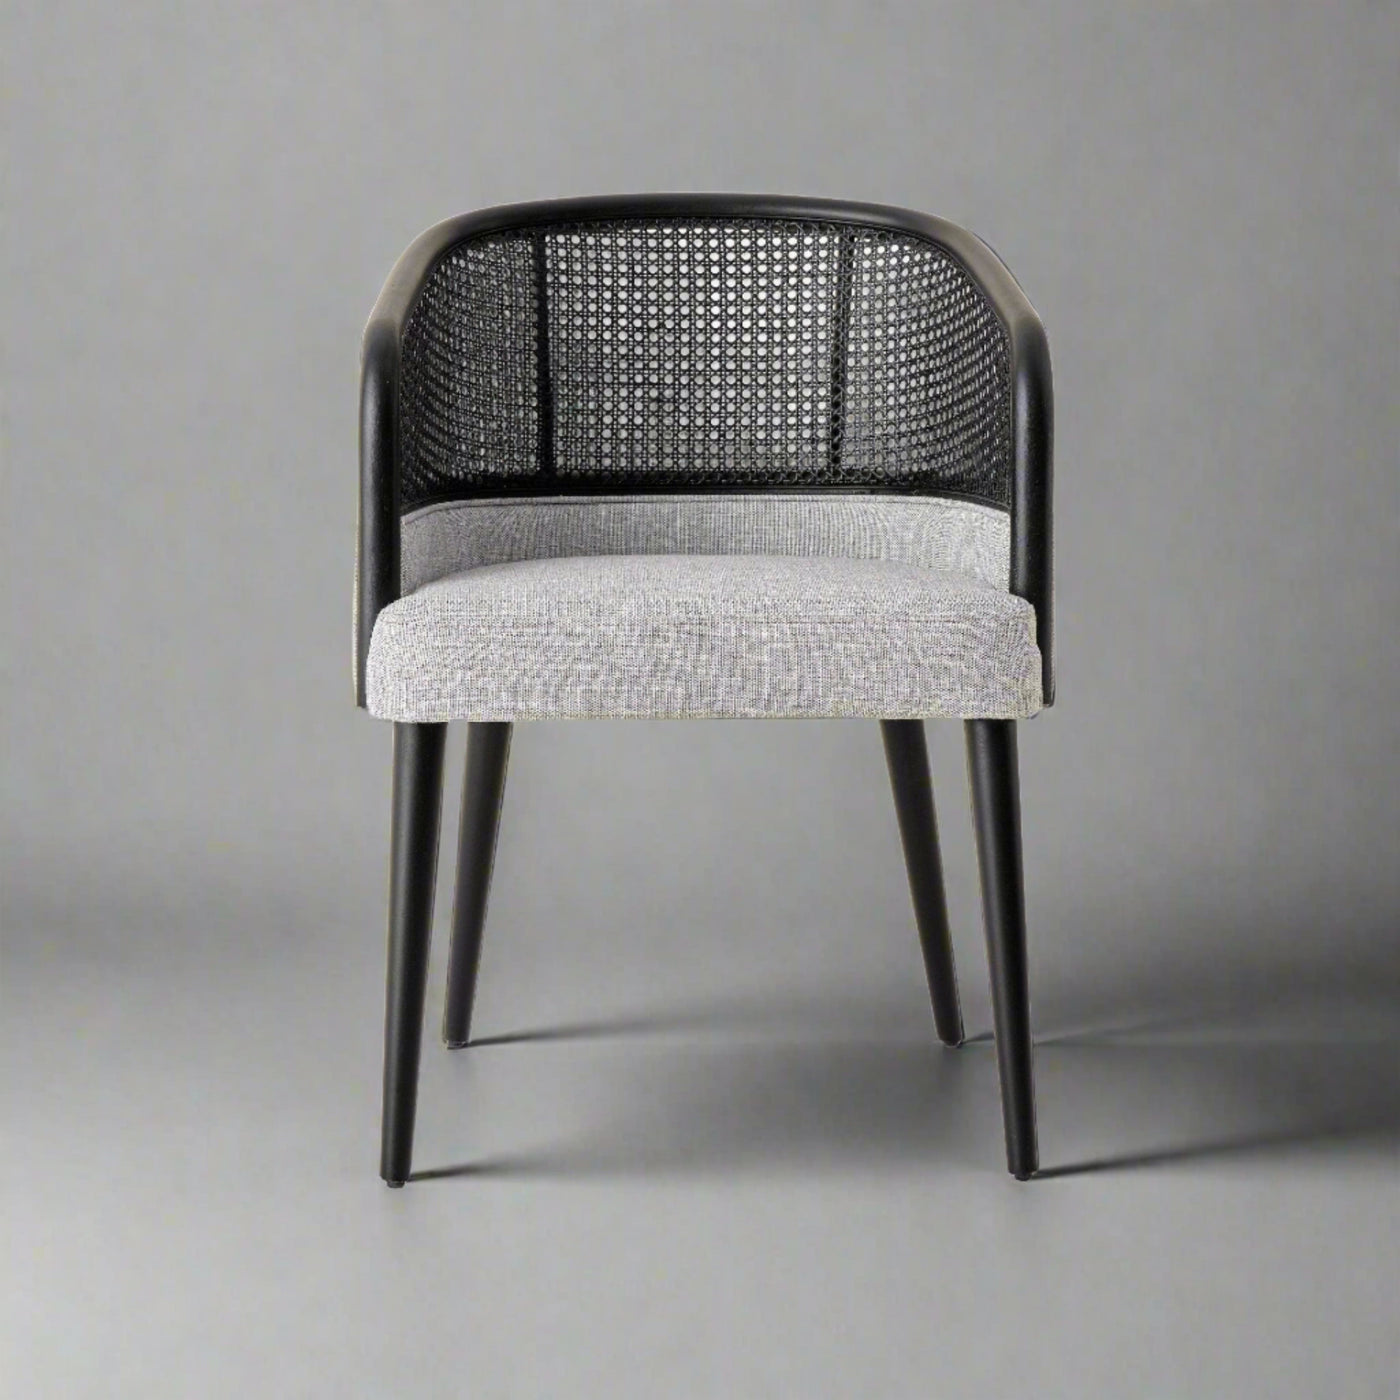 Pisa Rattan Armchair, Black - Light Grey Dining Chairs & Benches sazy.com